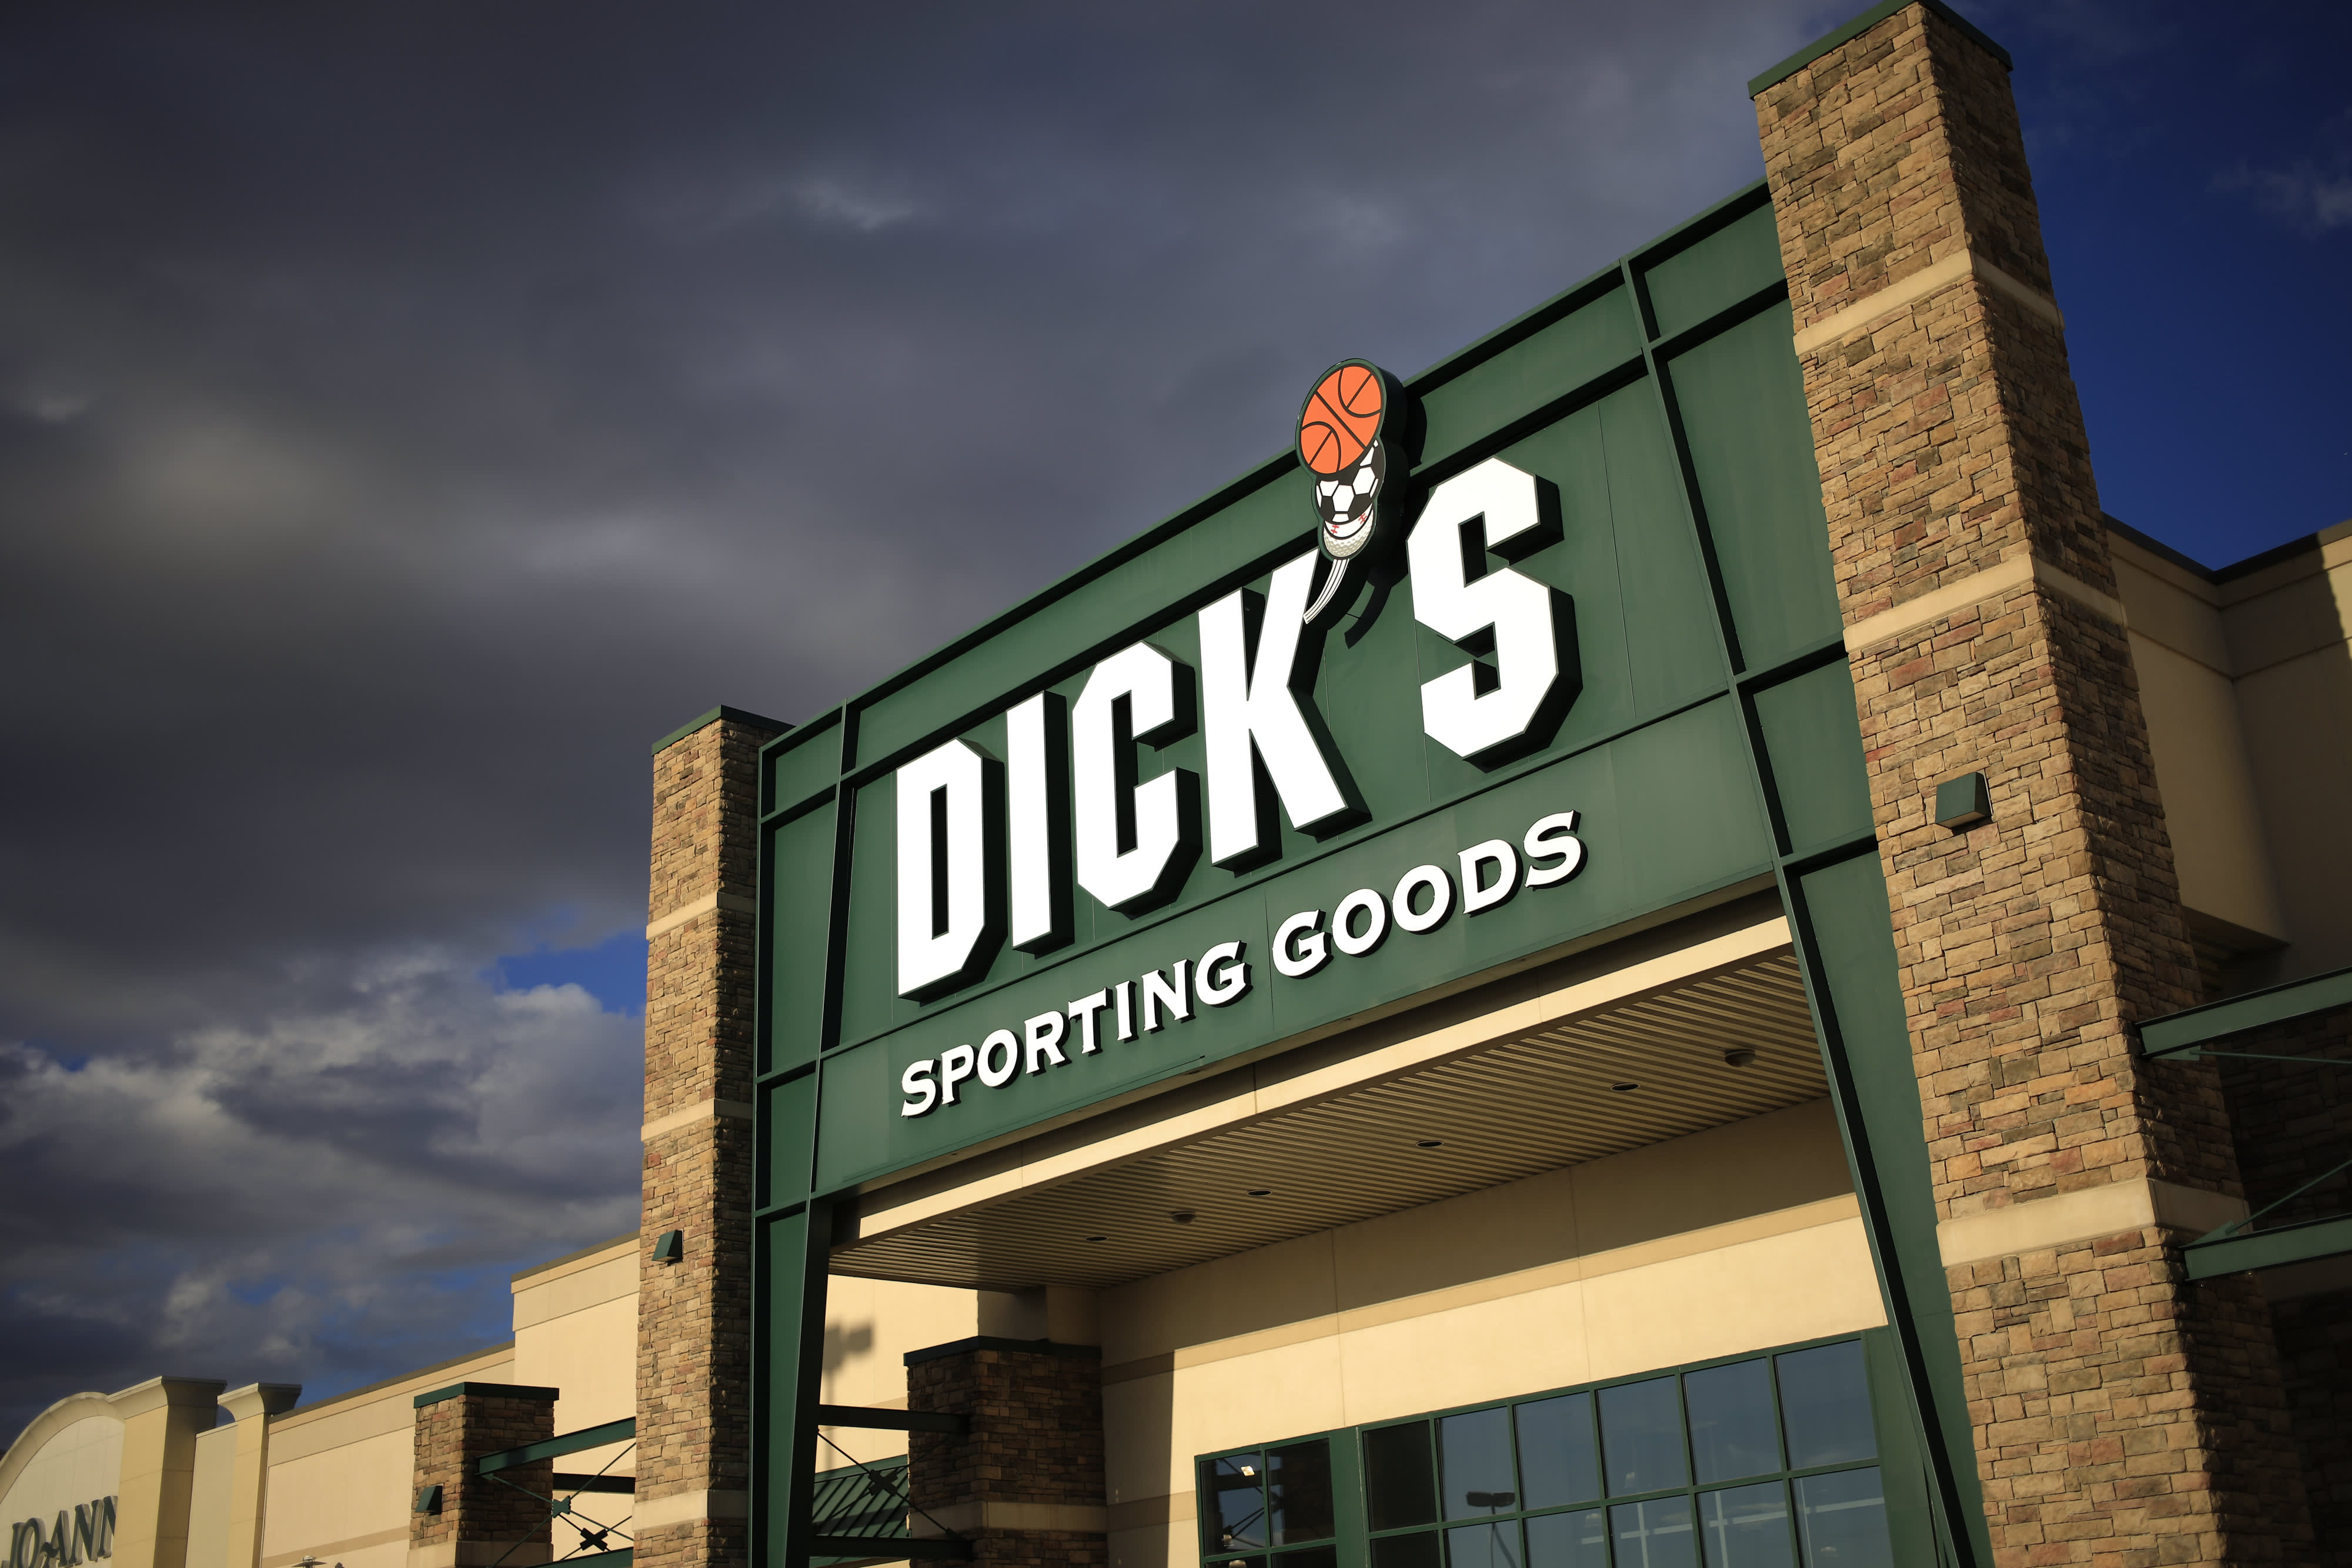 Dick's Sporting Good Open